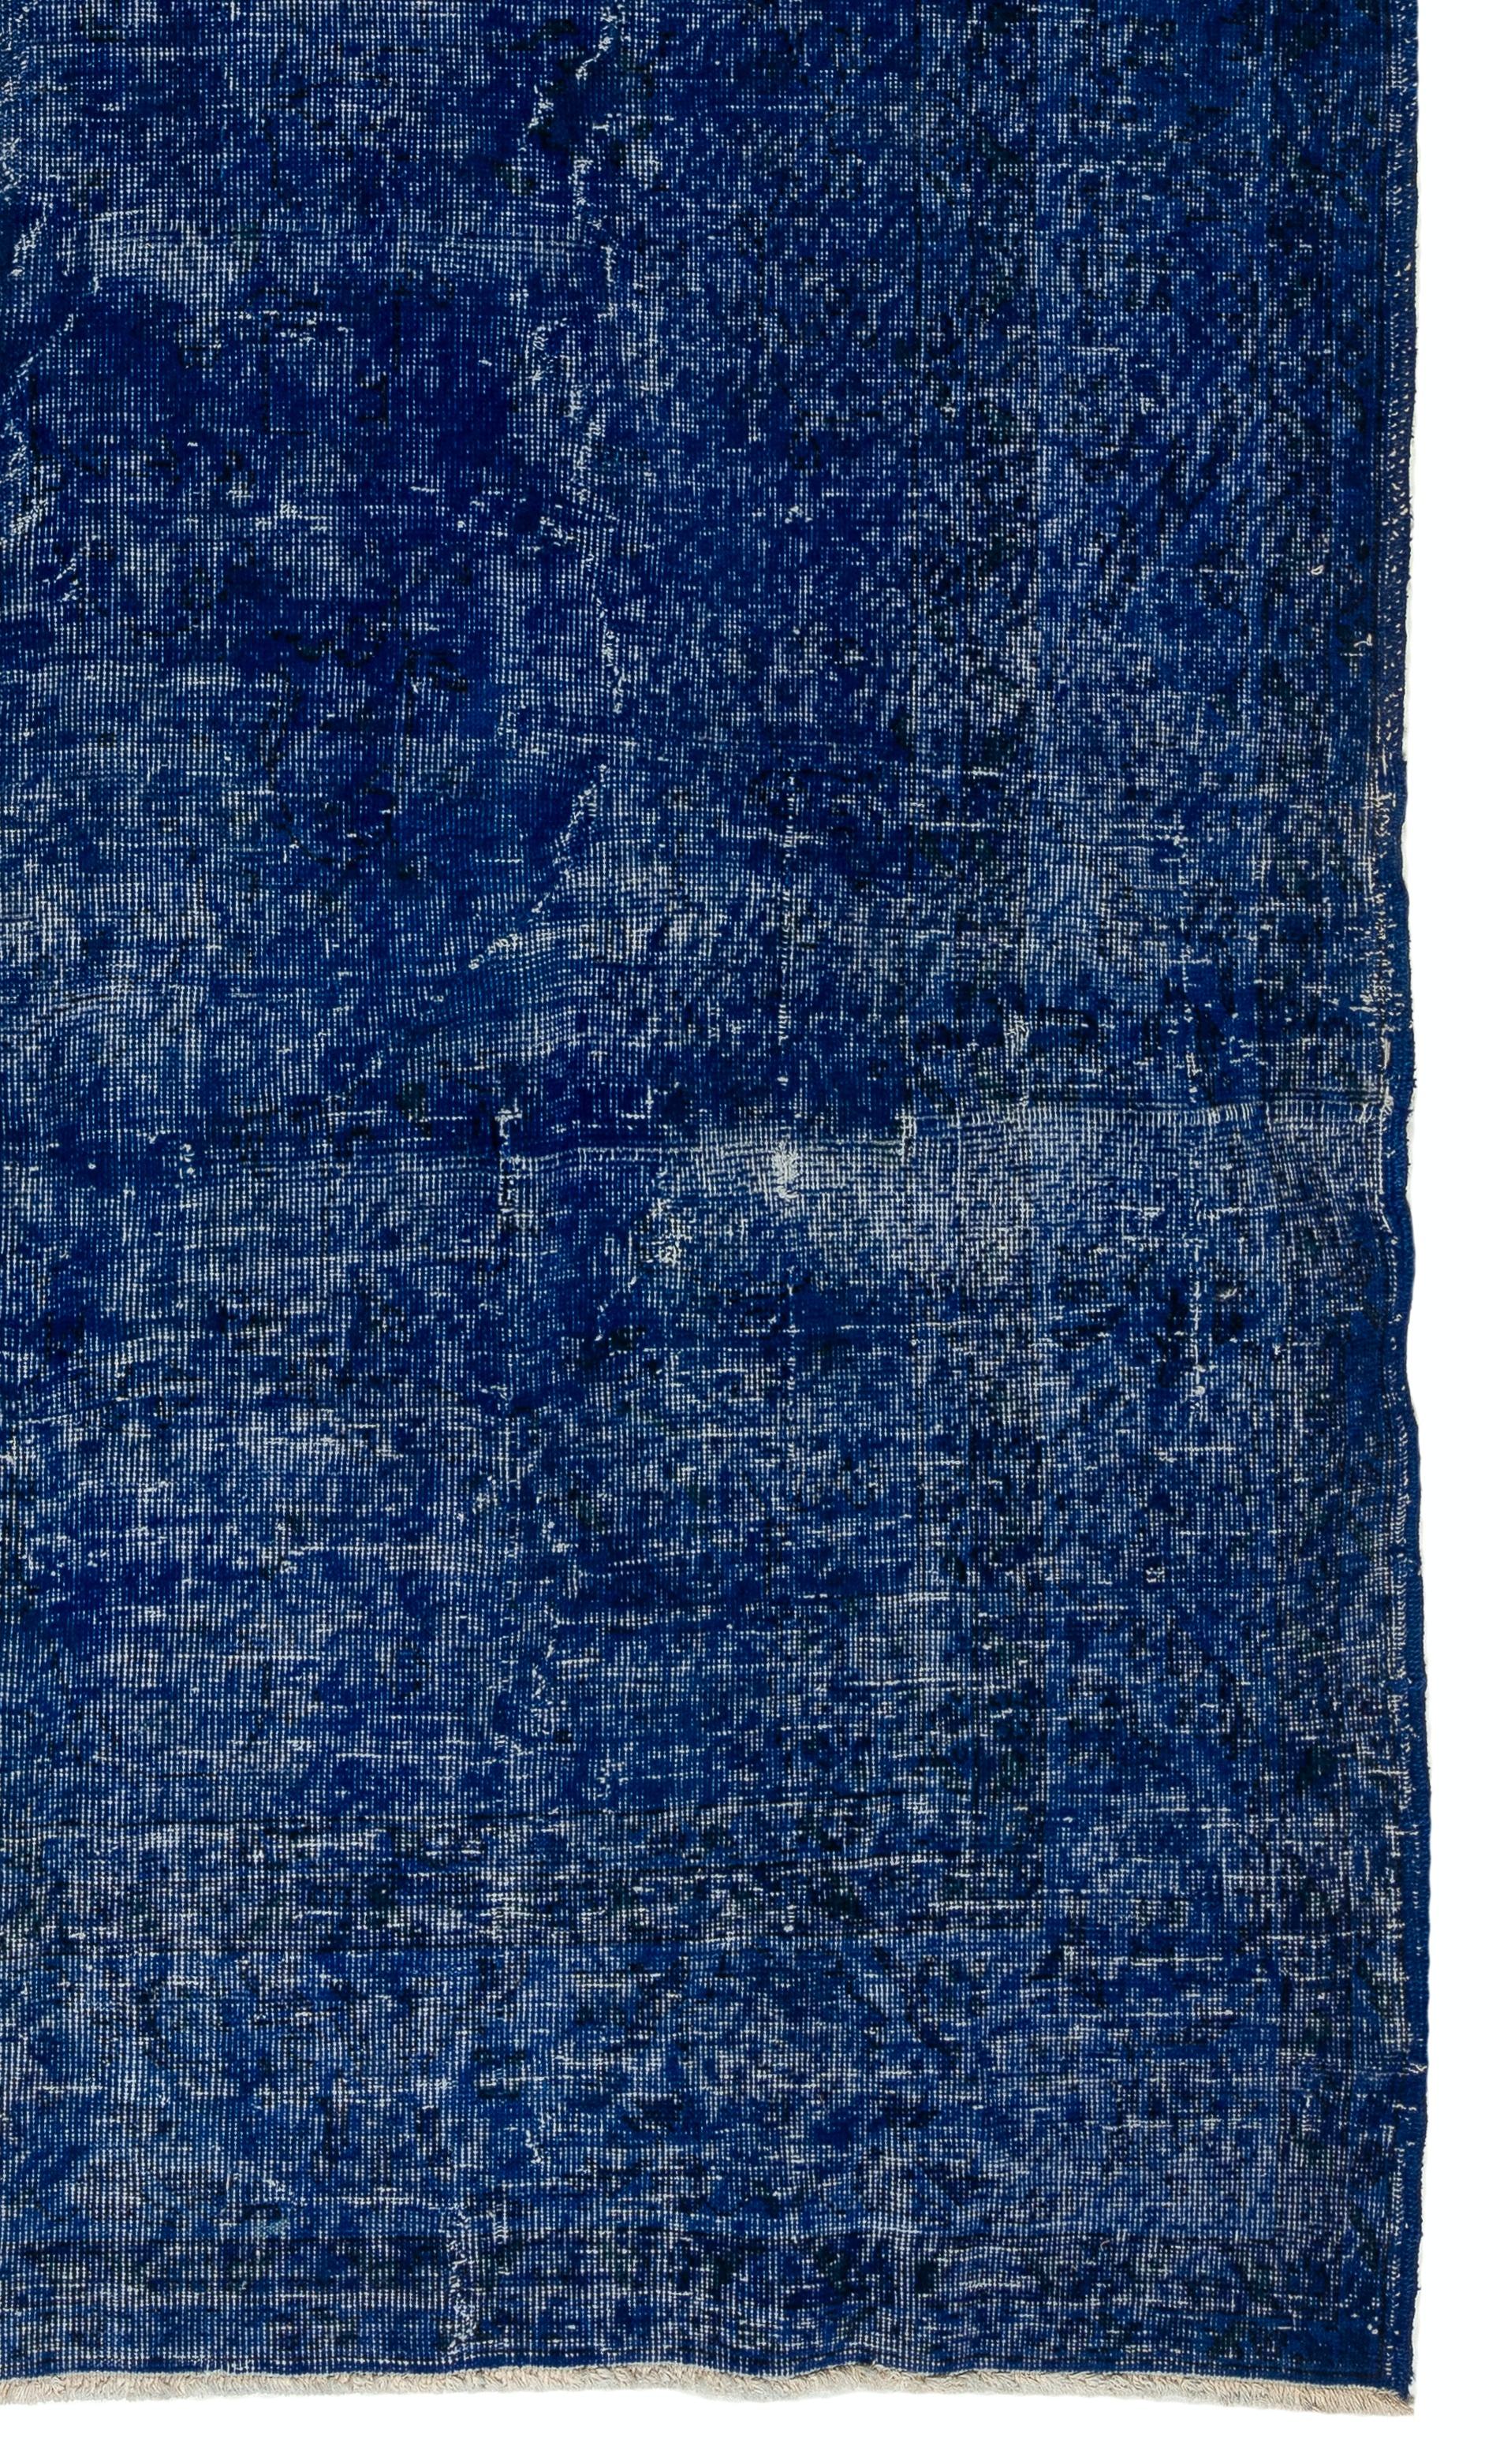 Hand-Woven 6.4x10.7 Ft Vintage Turkish Handmade Area Rug in Navy Blue. Living Room Carpet